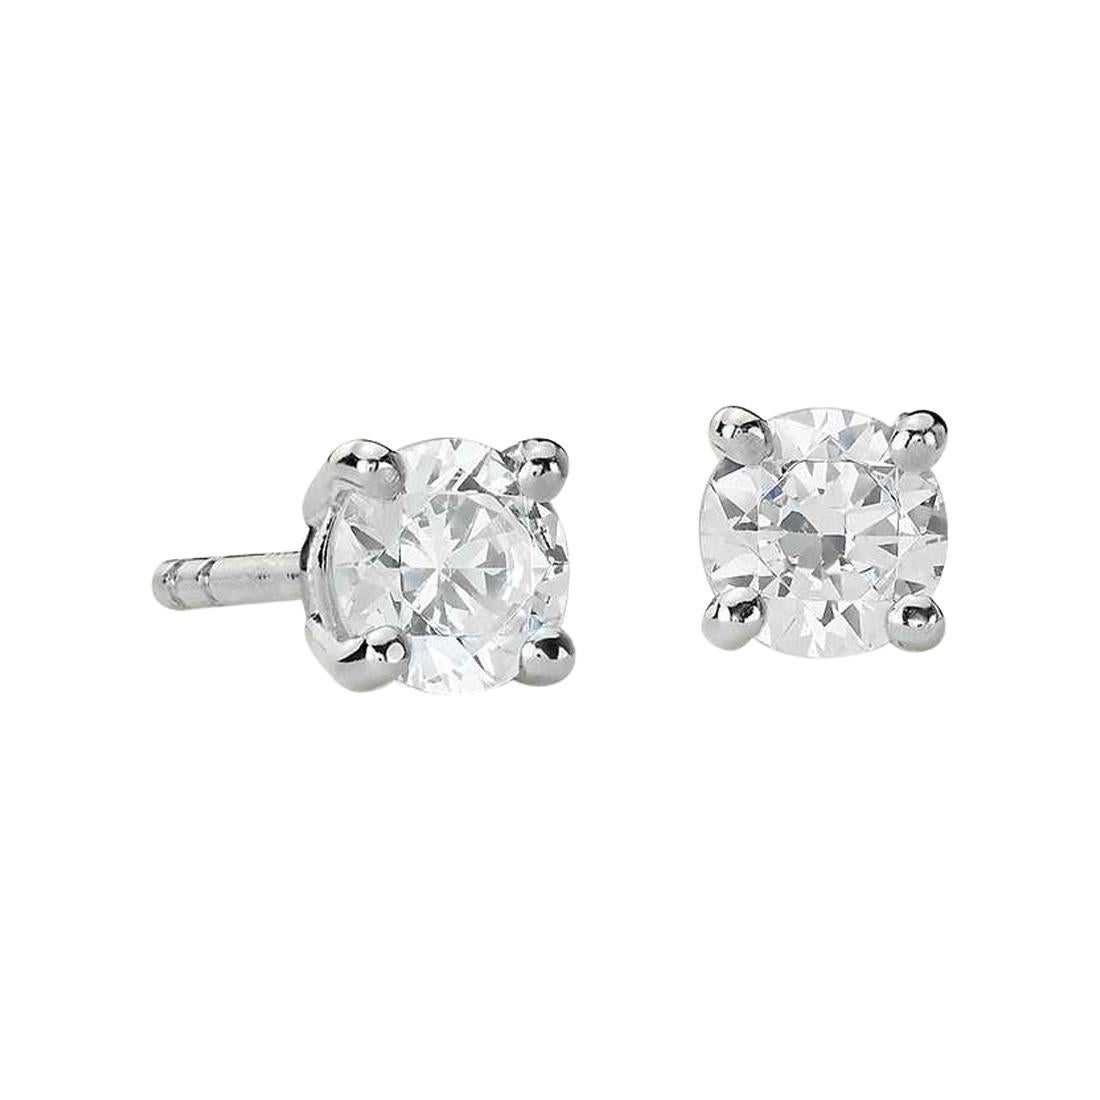 Suzy Levian 14k White Gold Round cut White Diamond Stud Earrings